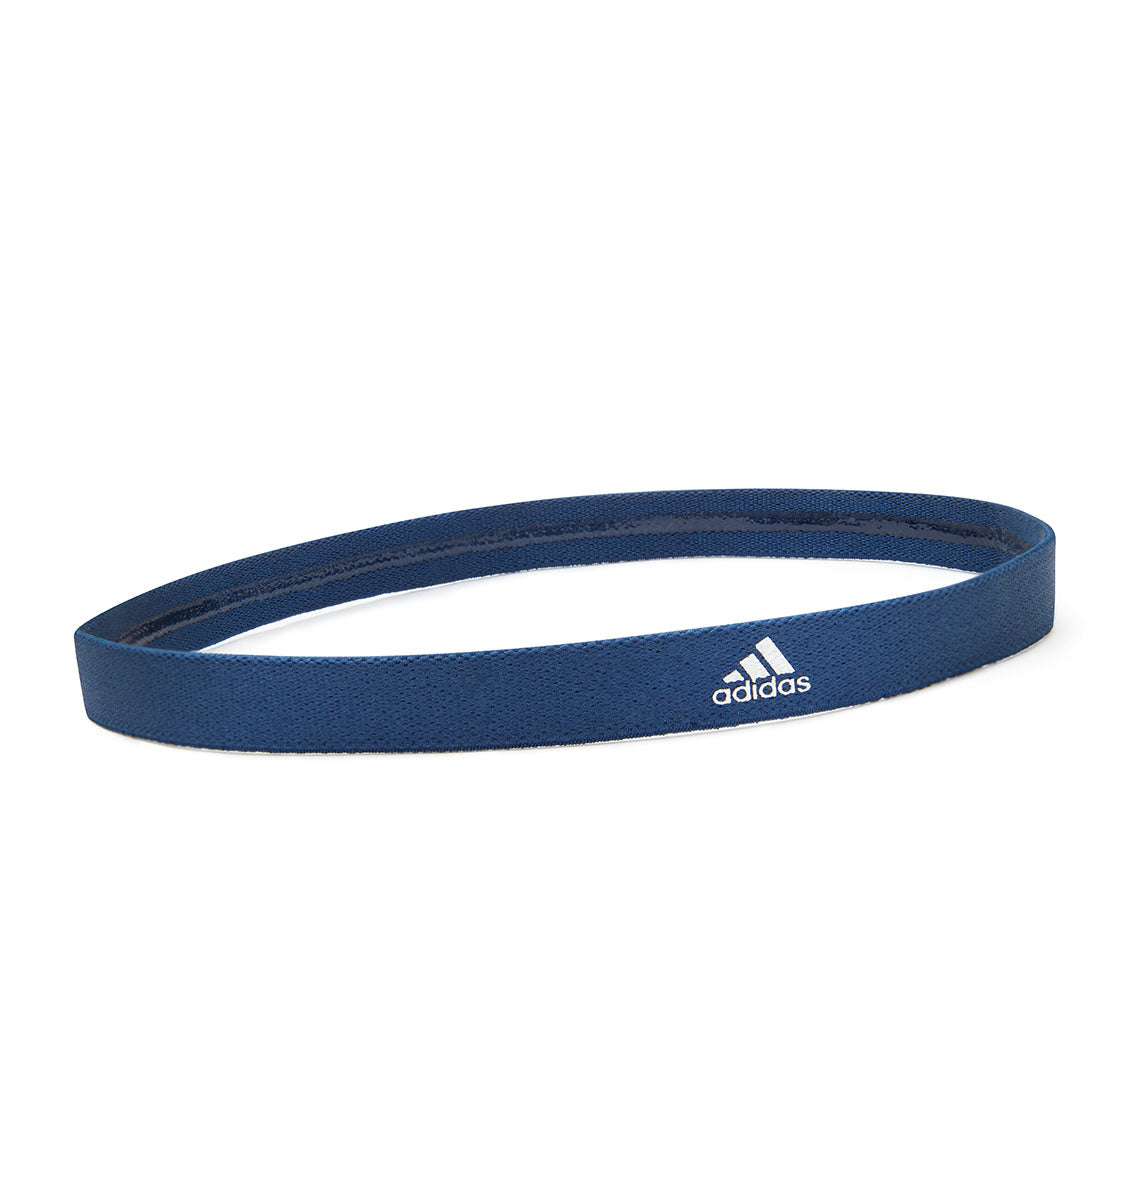 adidas Sports Hair Bands - Metallic Grey/Blue/Burgundy (3 Pack) - 6